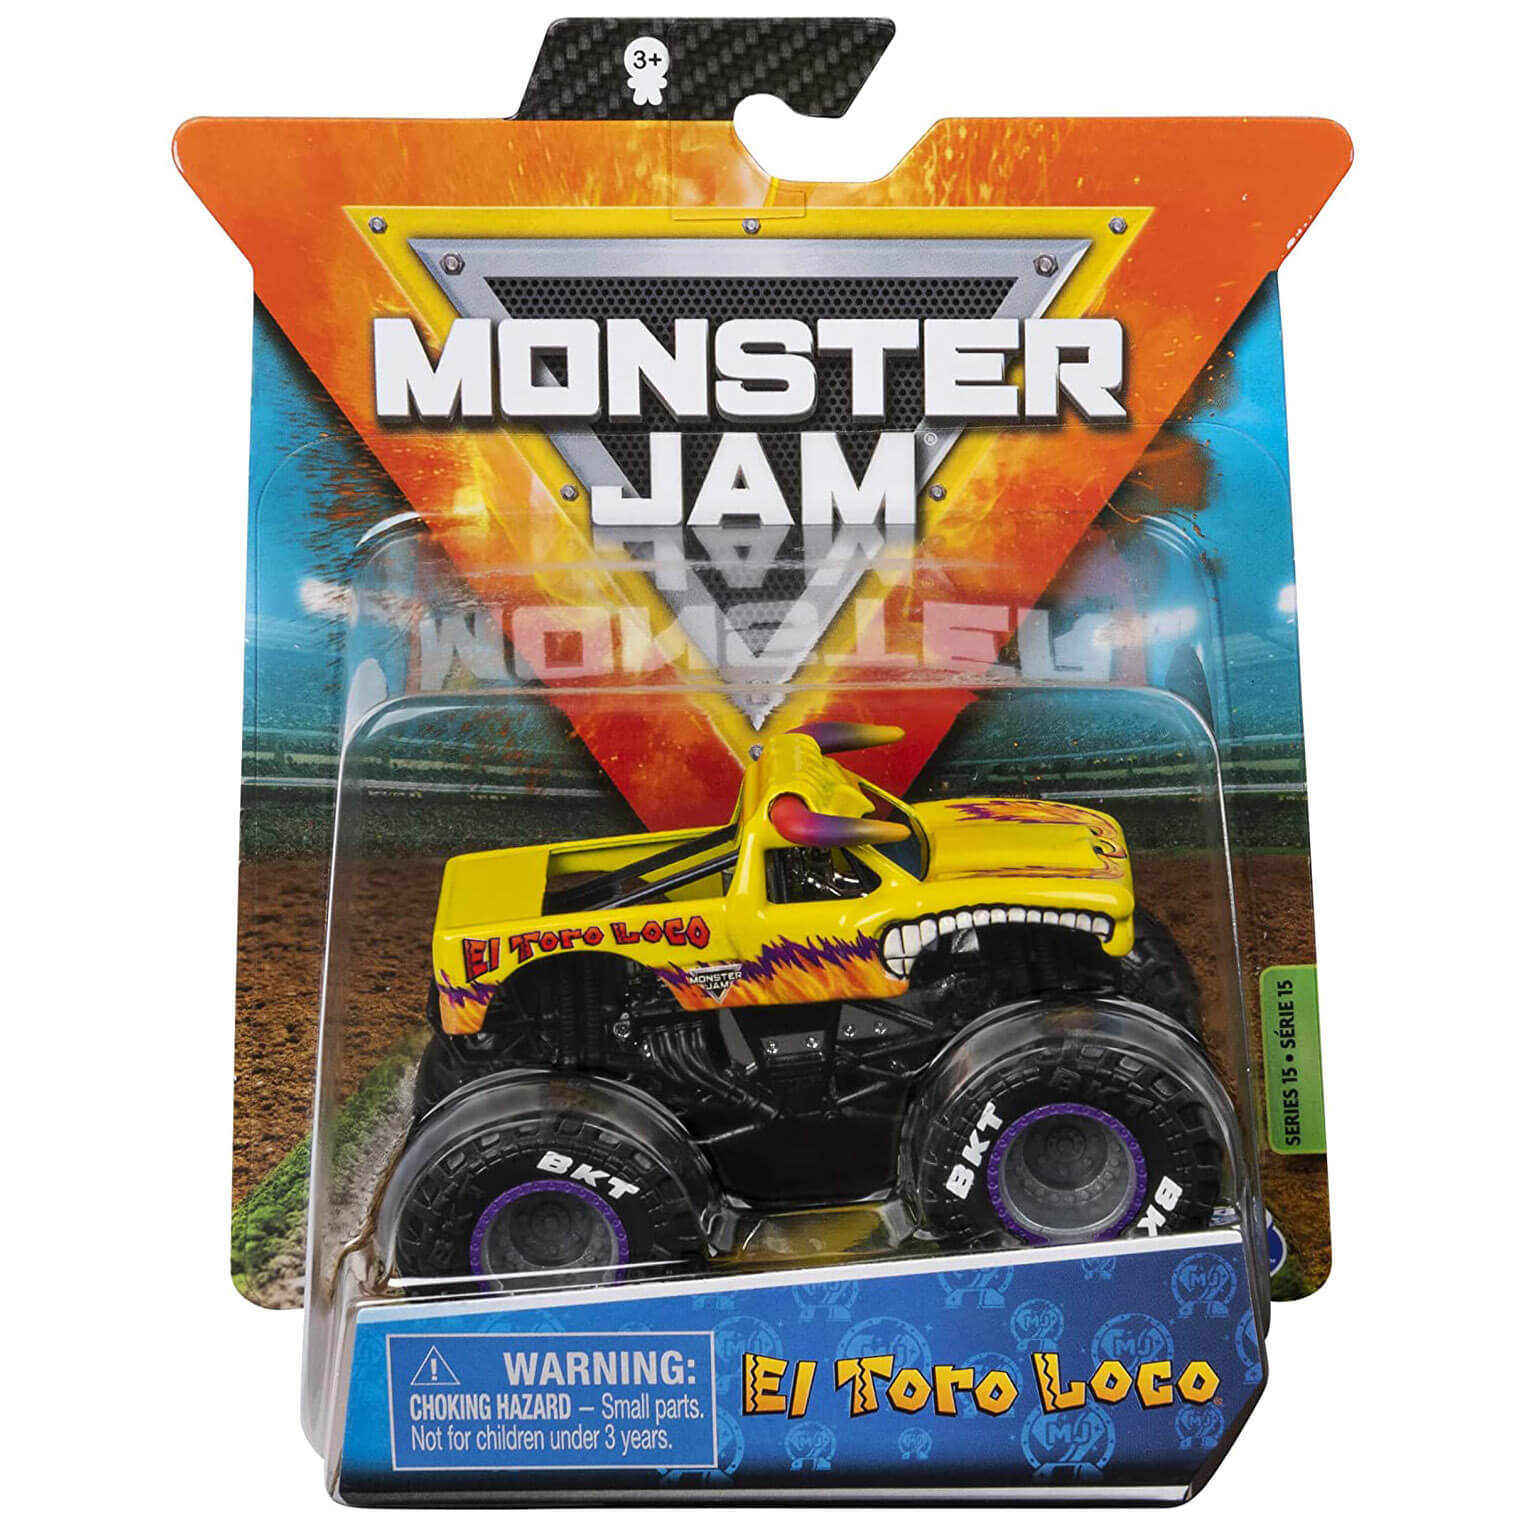 Monster Jam el Toro Loco 1:64 Scale Diecast Vehicle